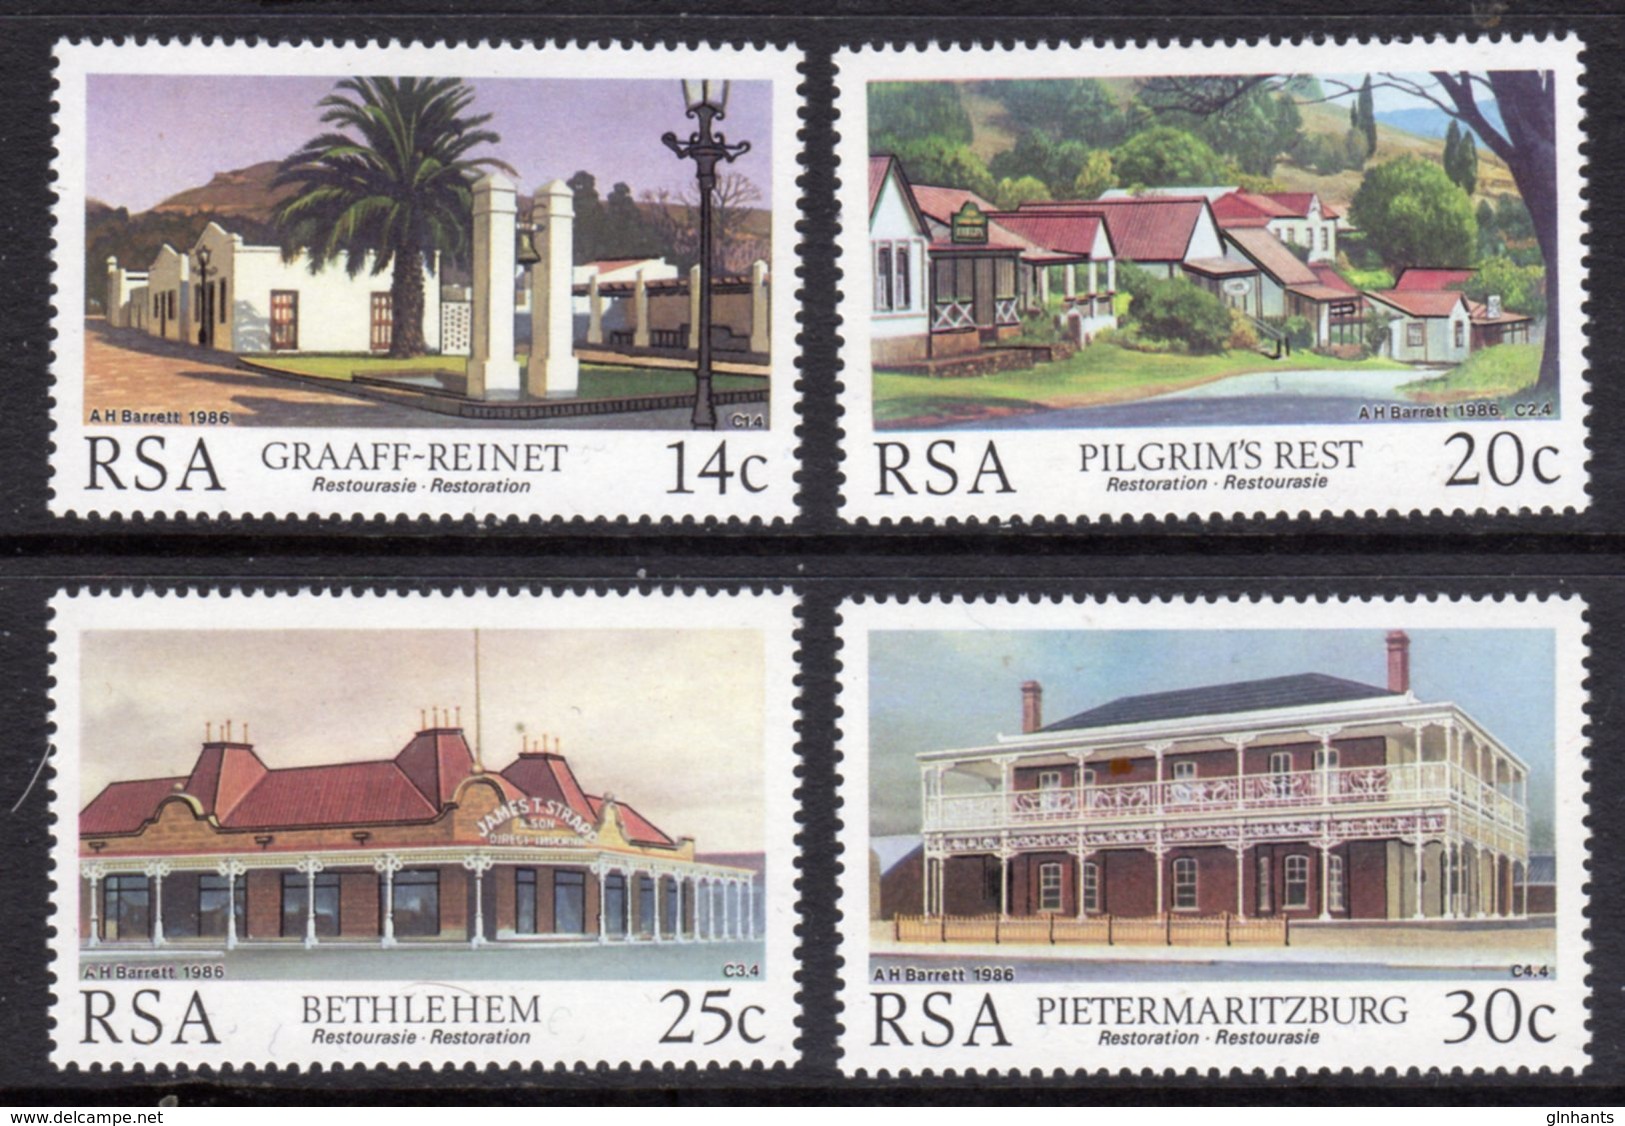 SOUTH AFRICA - 1986 HISTORIC BUILDINGS RESTORATION SET (4V) FINE MOUNTED MINT MM * SG 600-603 - Nuovi